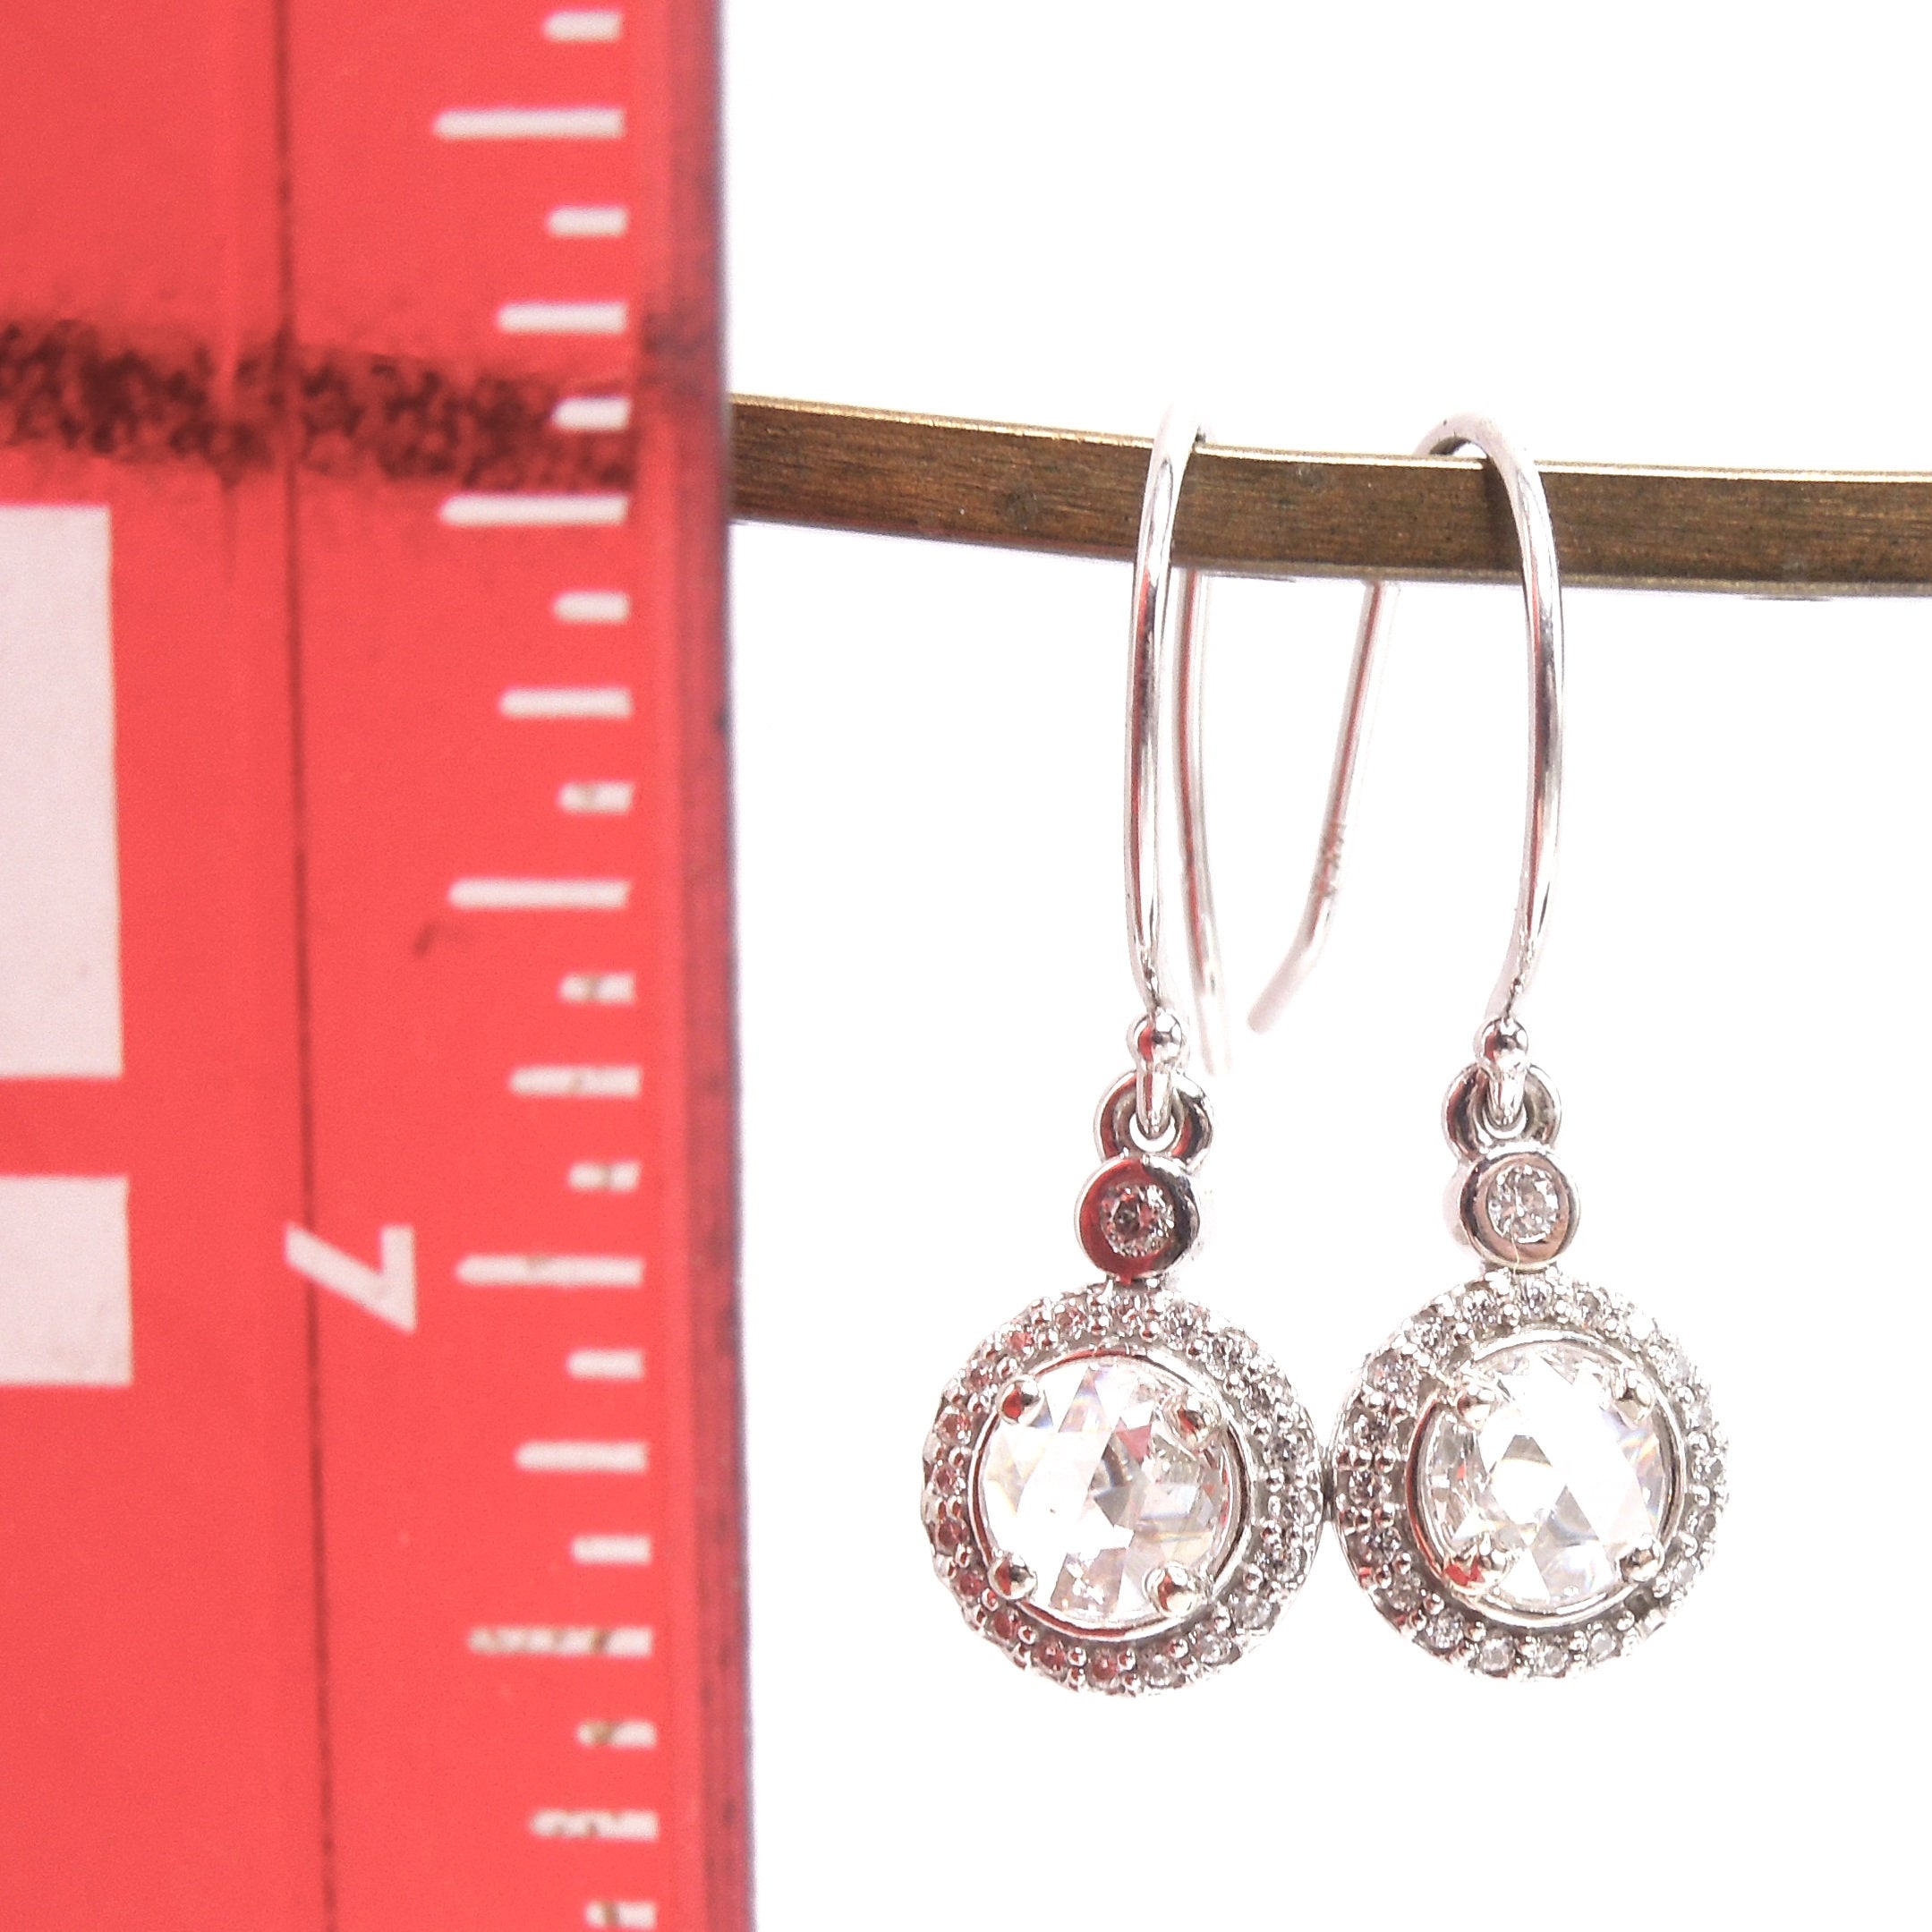 Rose Cut Diamonds and Diamond Halo Drop Earrings in 14K White Gold